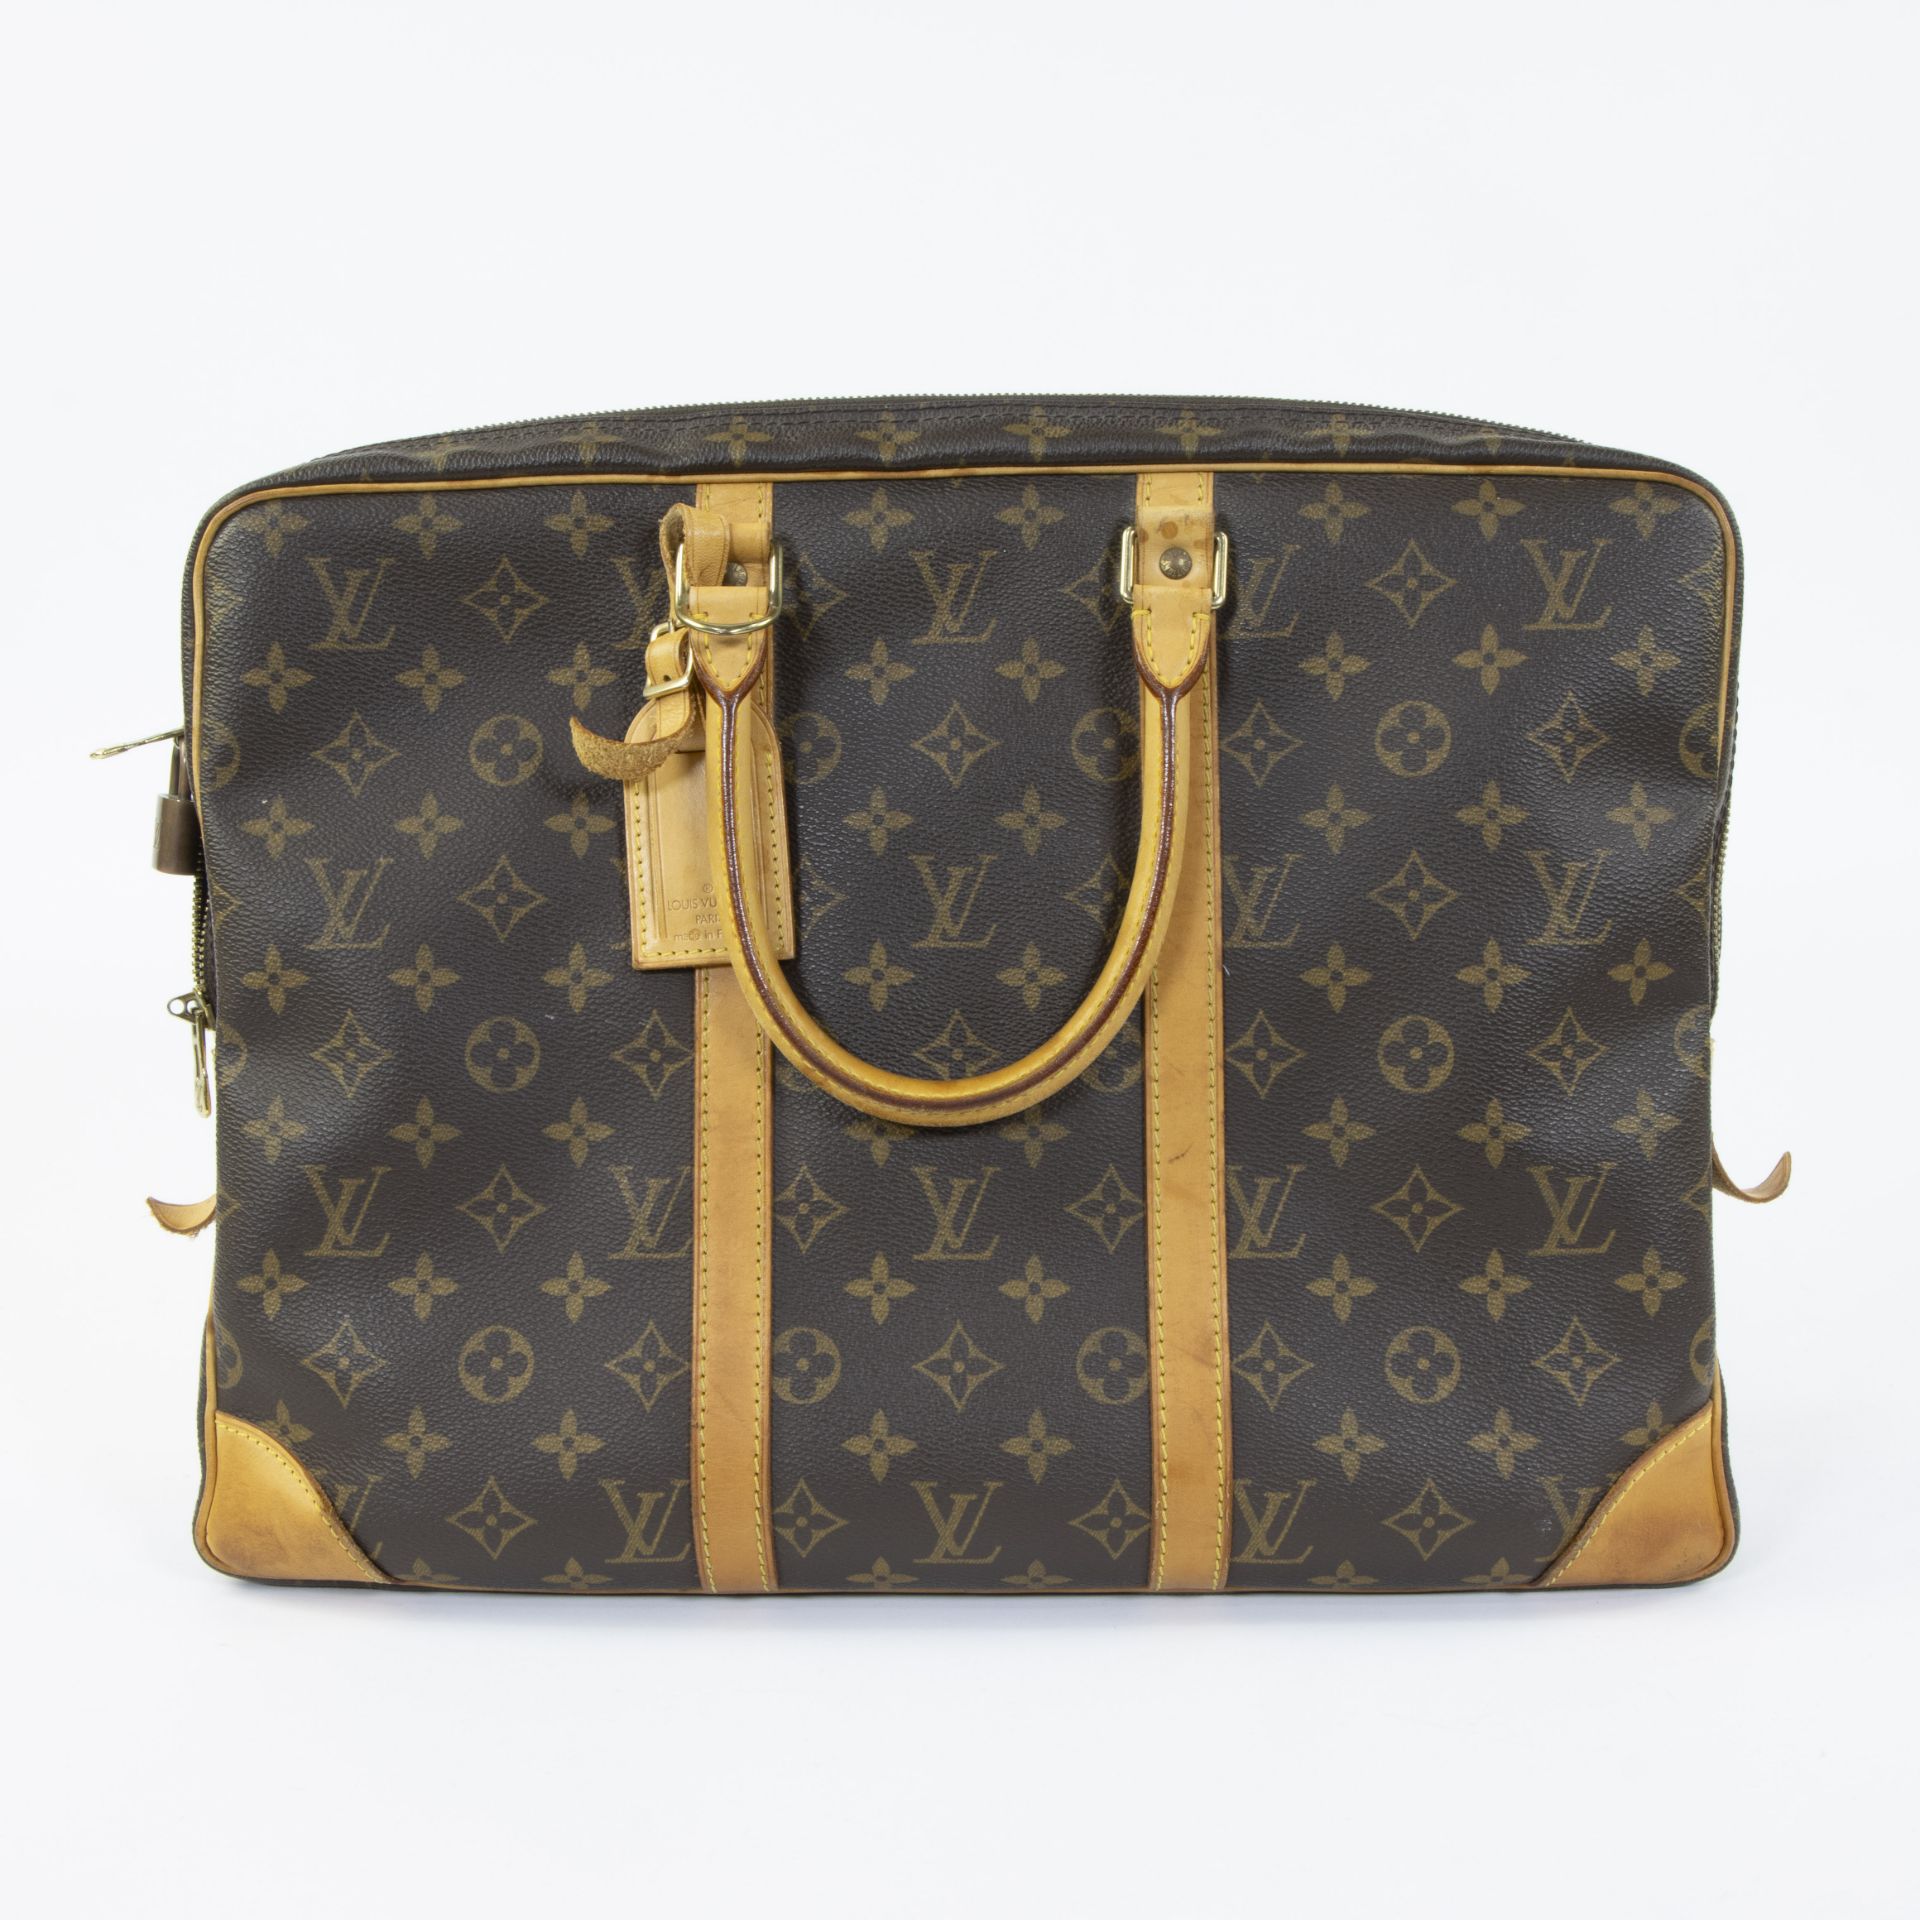 Louis Vuitton small travel bag